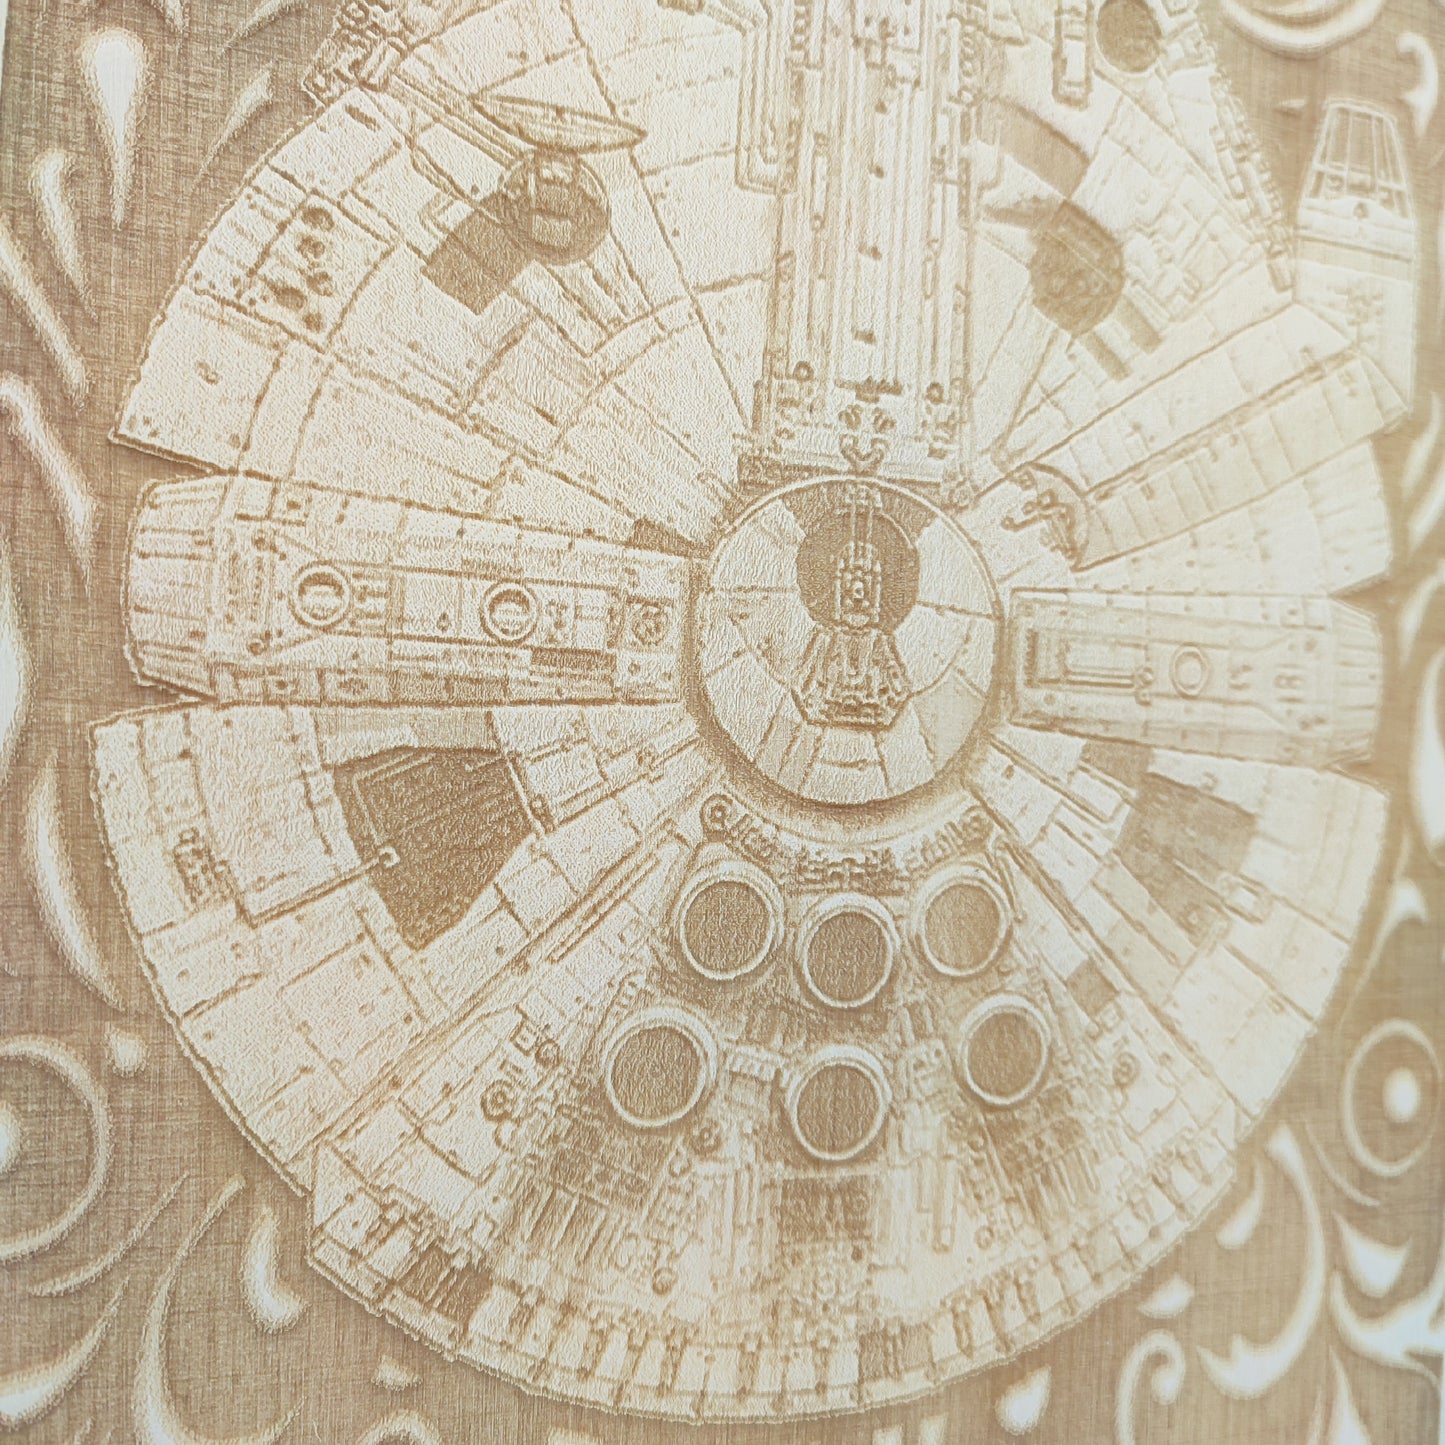 Millennium Falcon - Wood Engraving